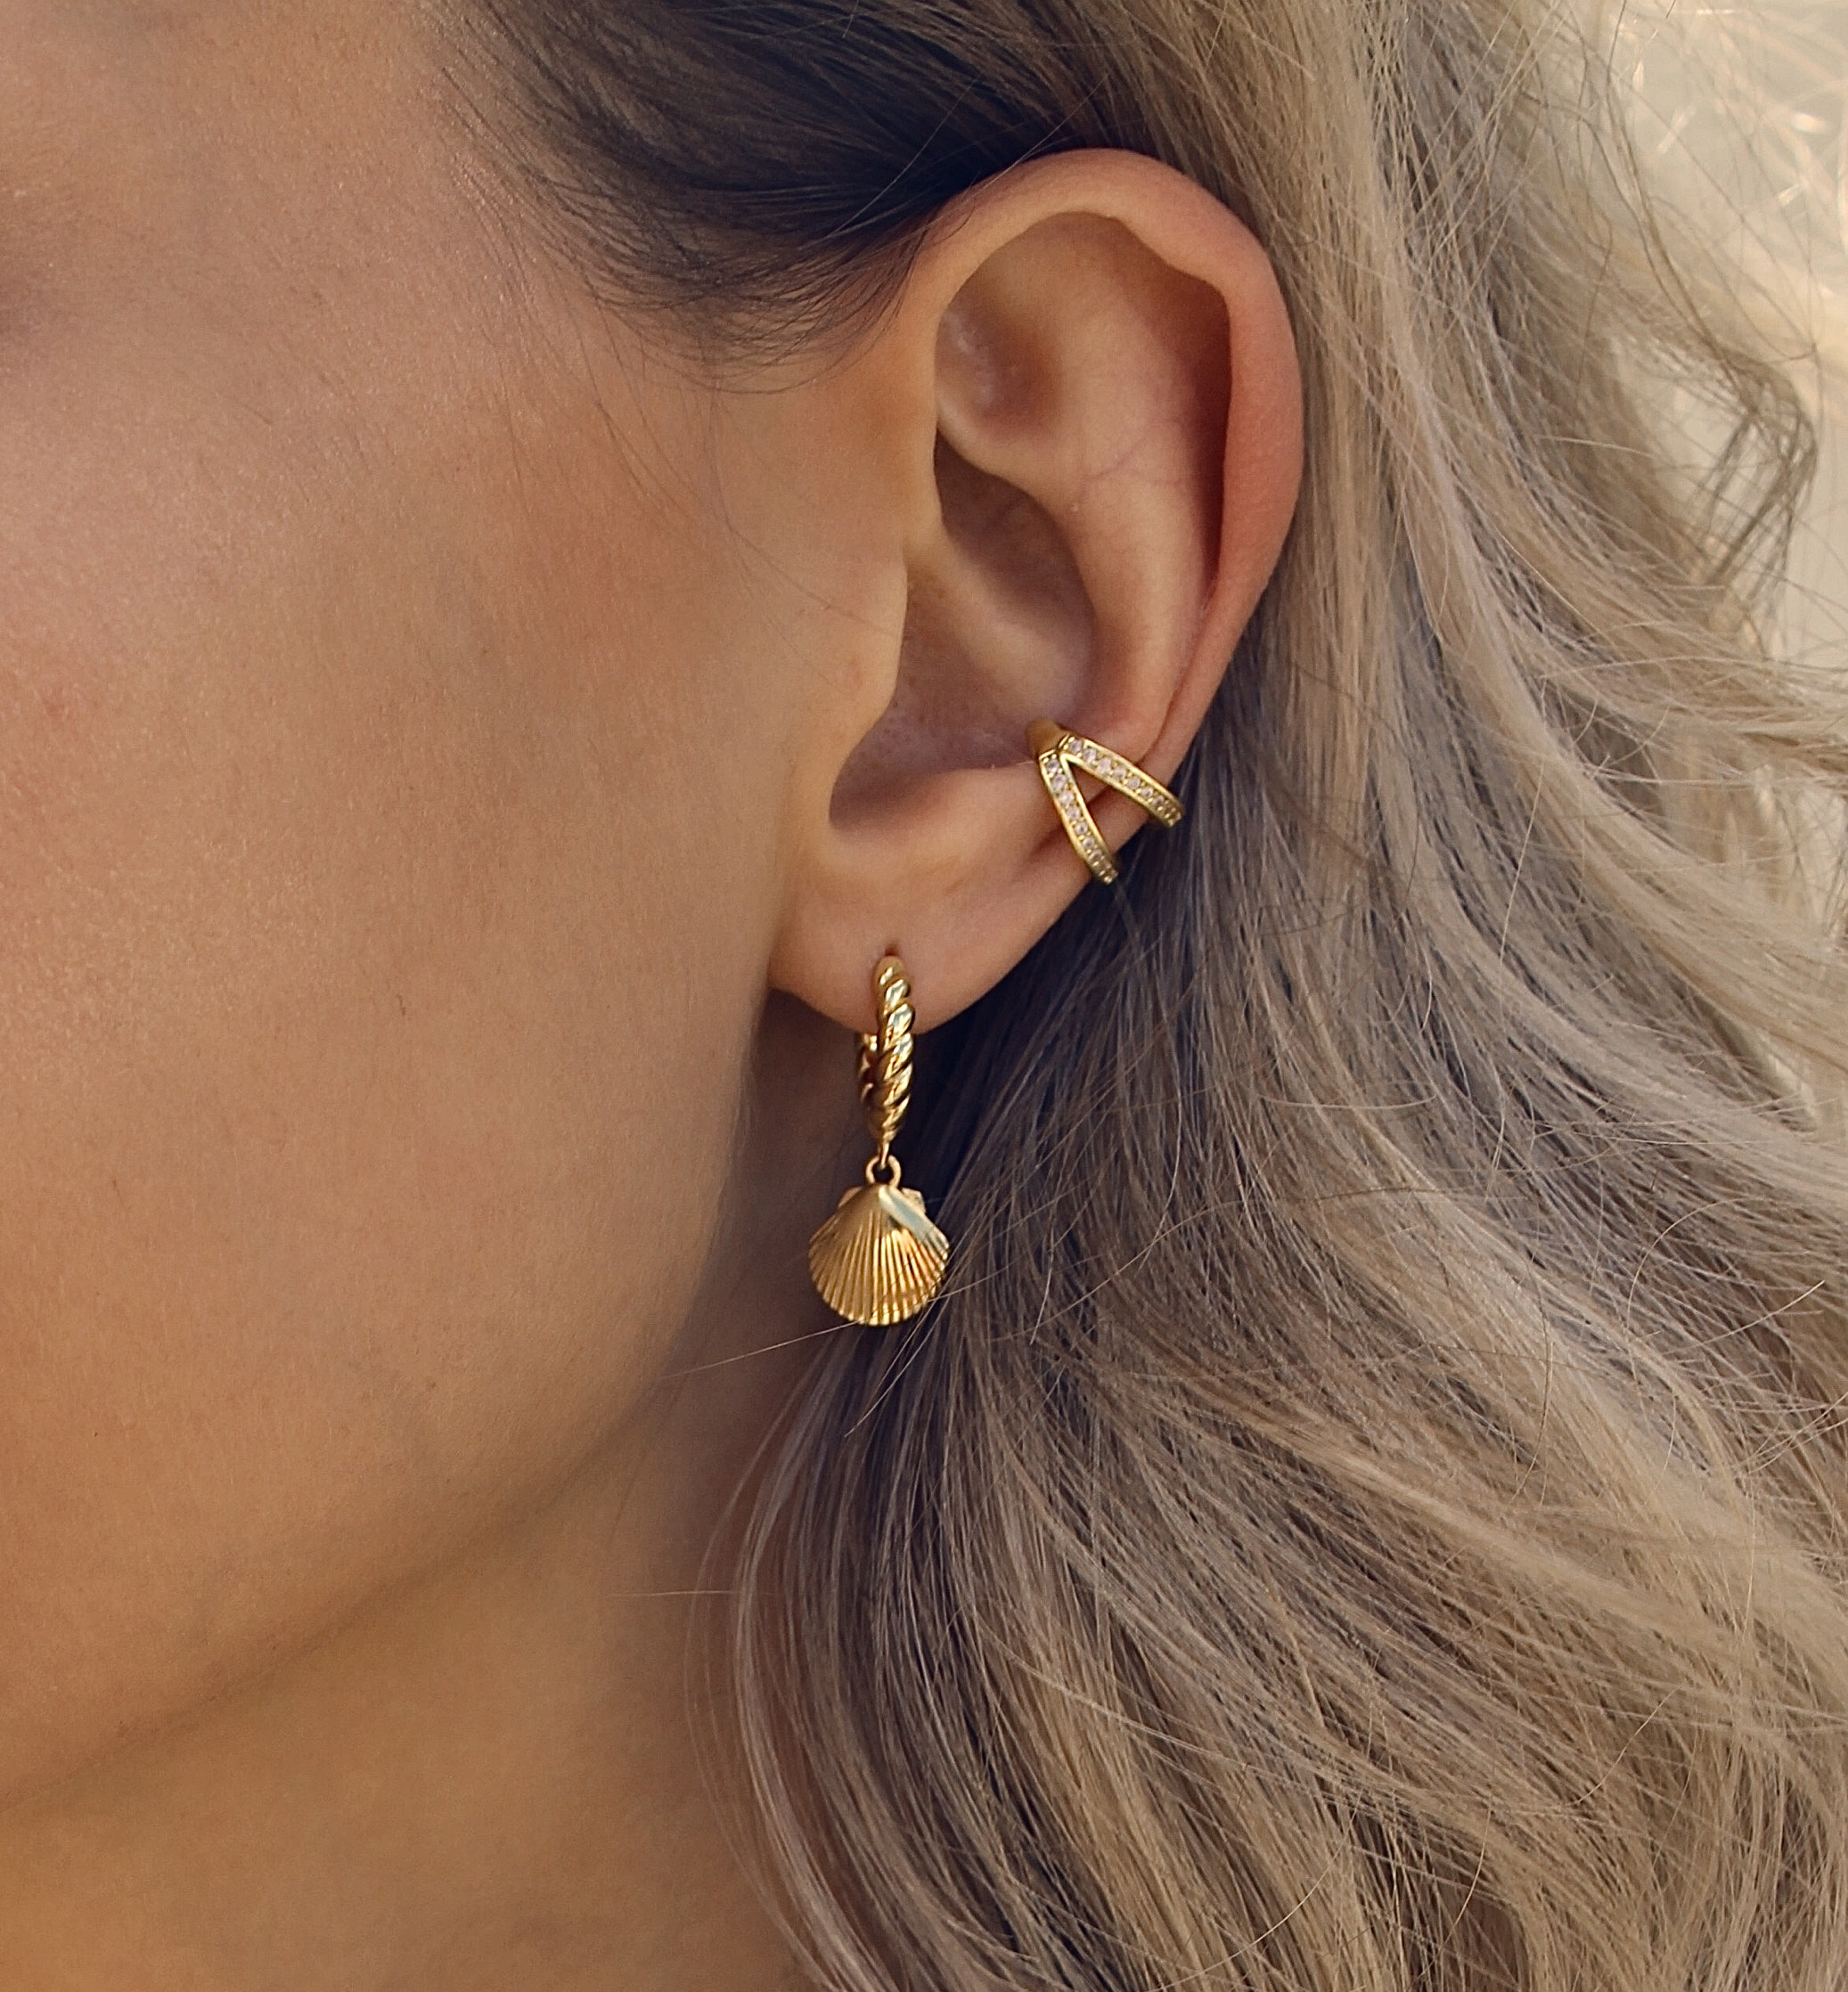 Ear Cuff „Thalia“ (18K vergoldet, 925 Silber, Zirkonia, Opal)